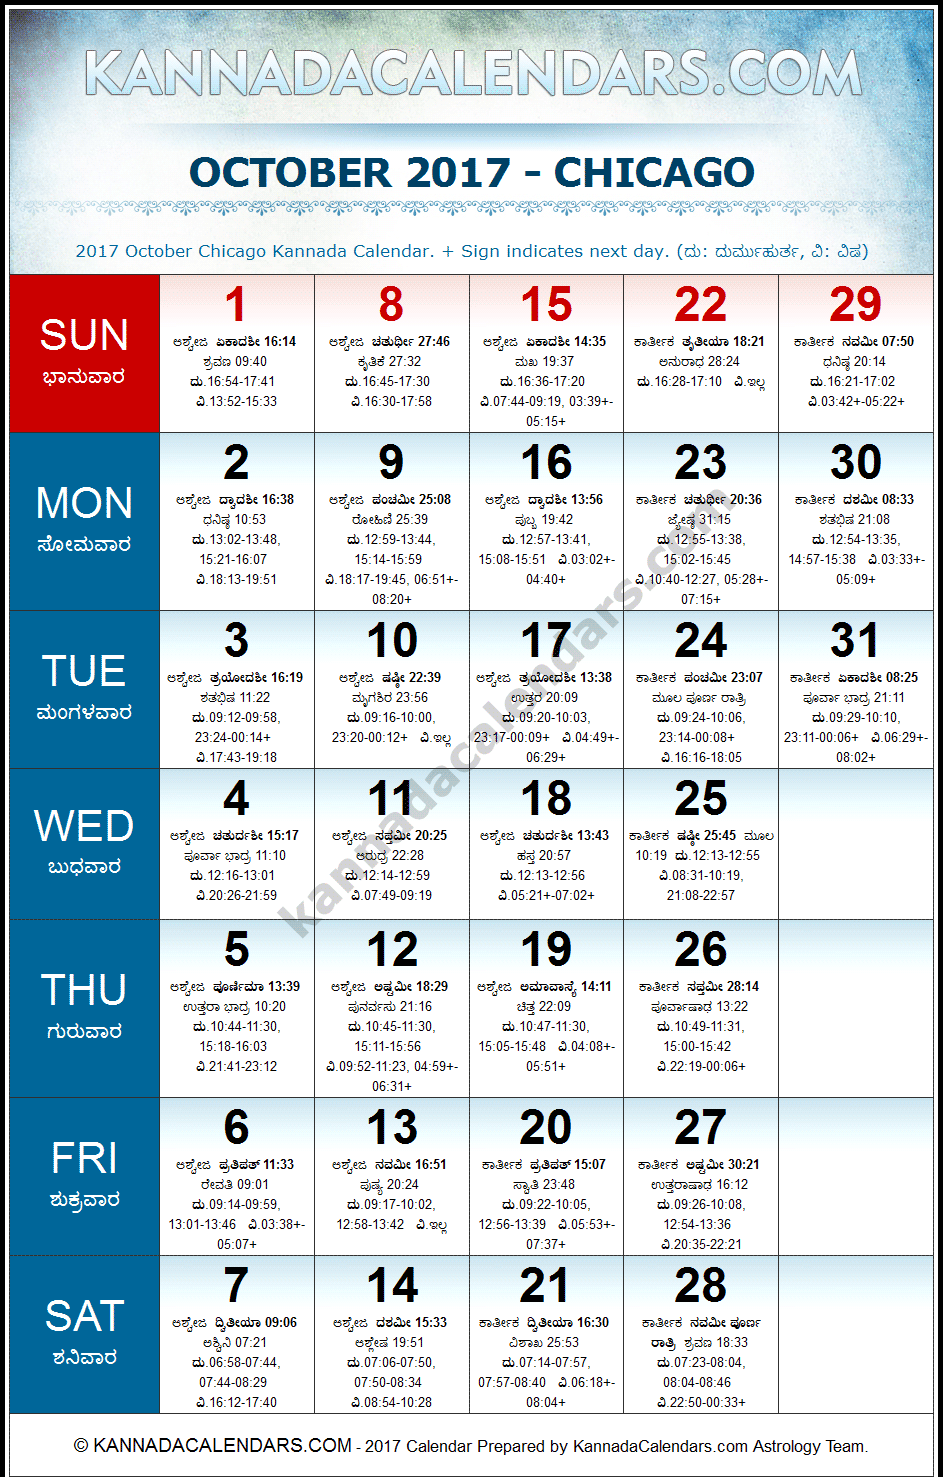 October 2017 Kannada Calendar for Chicago, USA